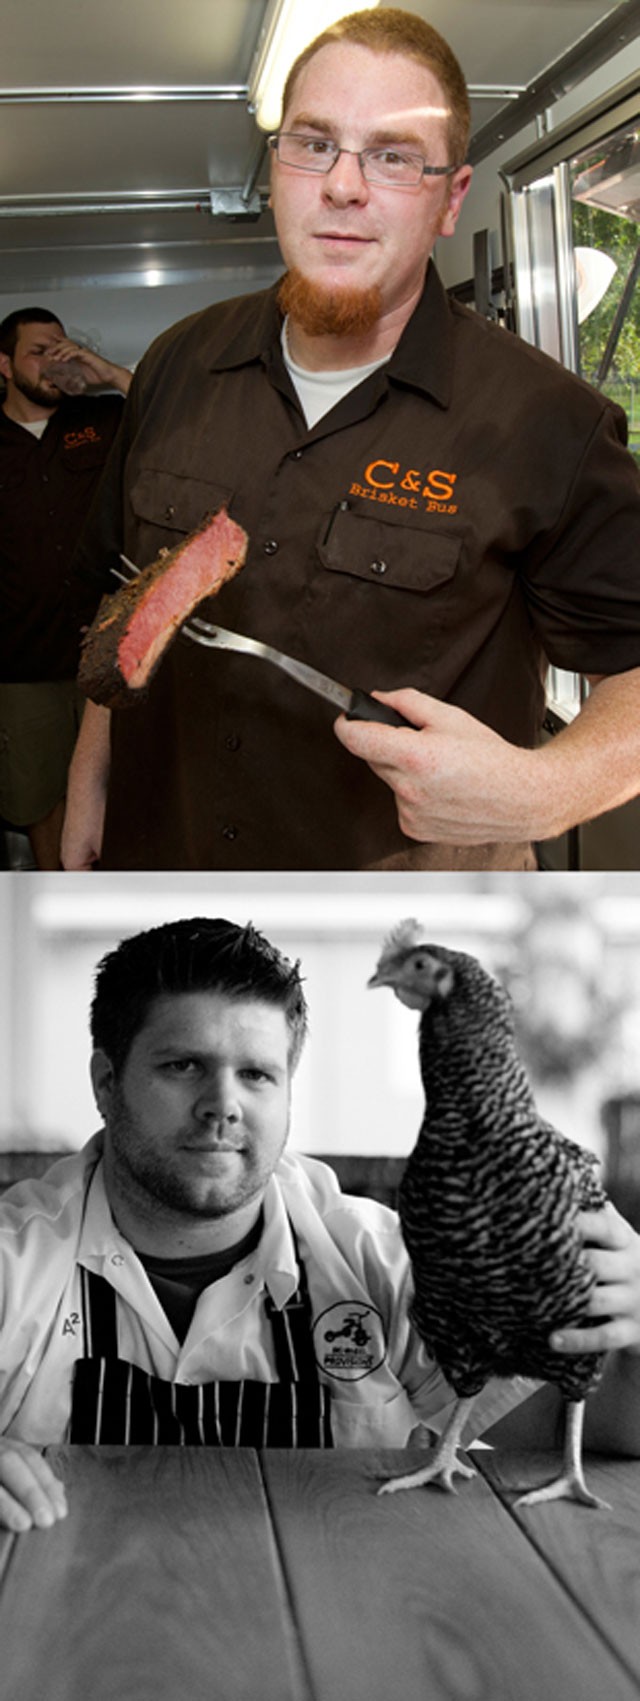 Top: Chef Chris Jaskulski of C&S Brisket Bus, bottom: Chef Tony Adams of Big Wheel